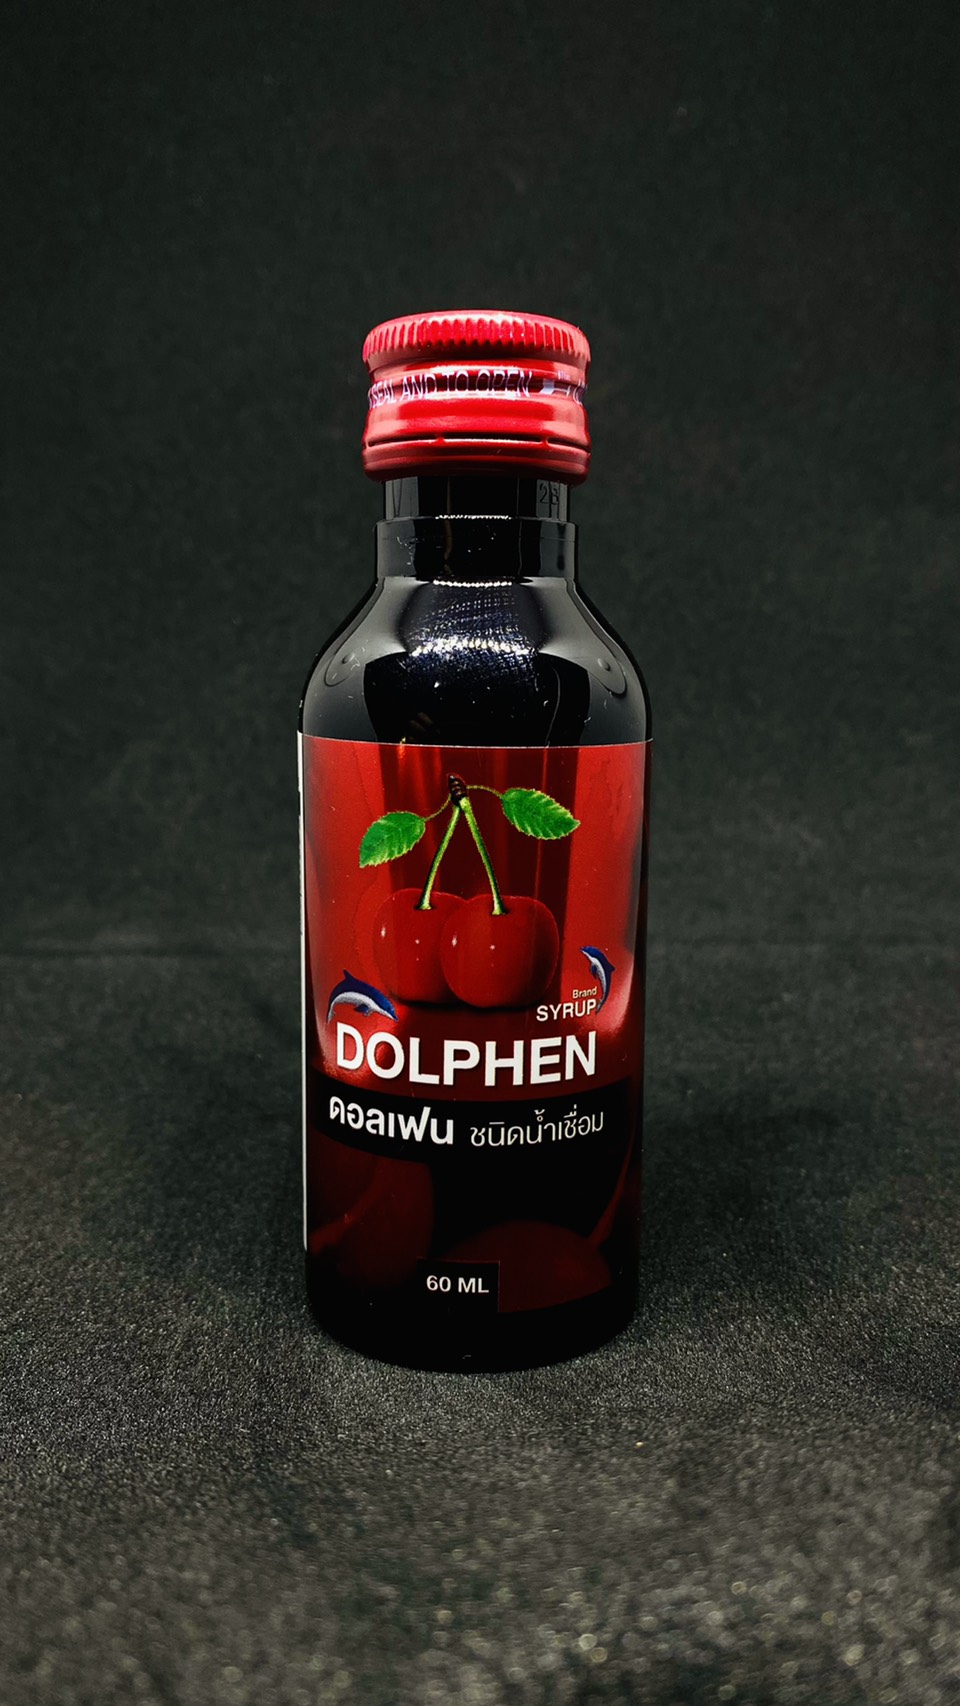 DOLPHEN Syrup ดอลเฟน ชนิดน้ำเชื่อม 60ml. 1 ขวด